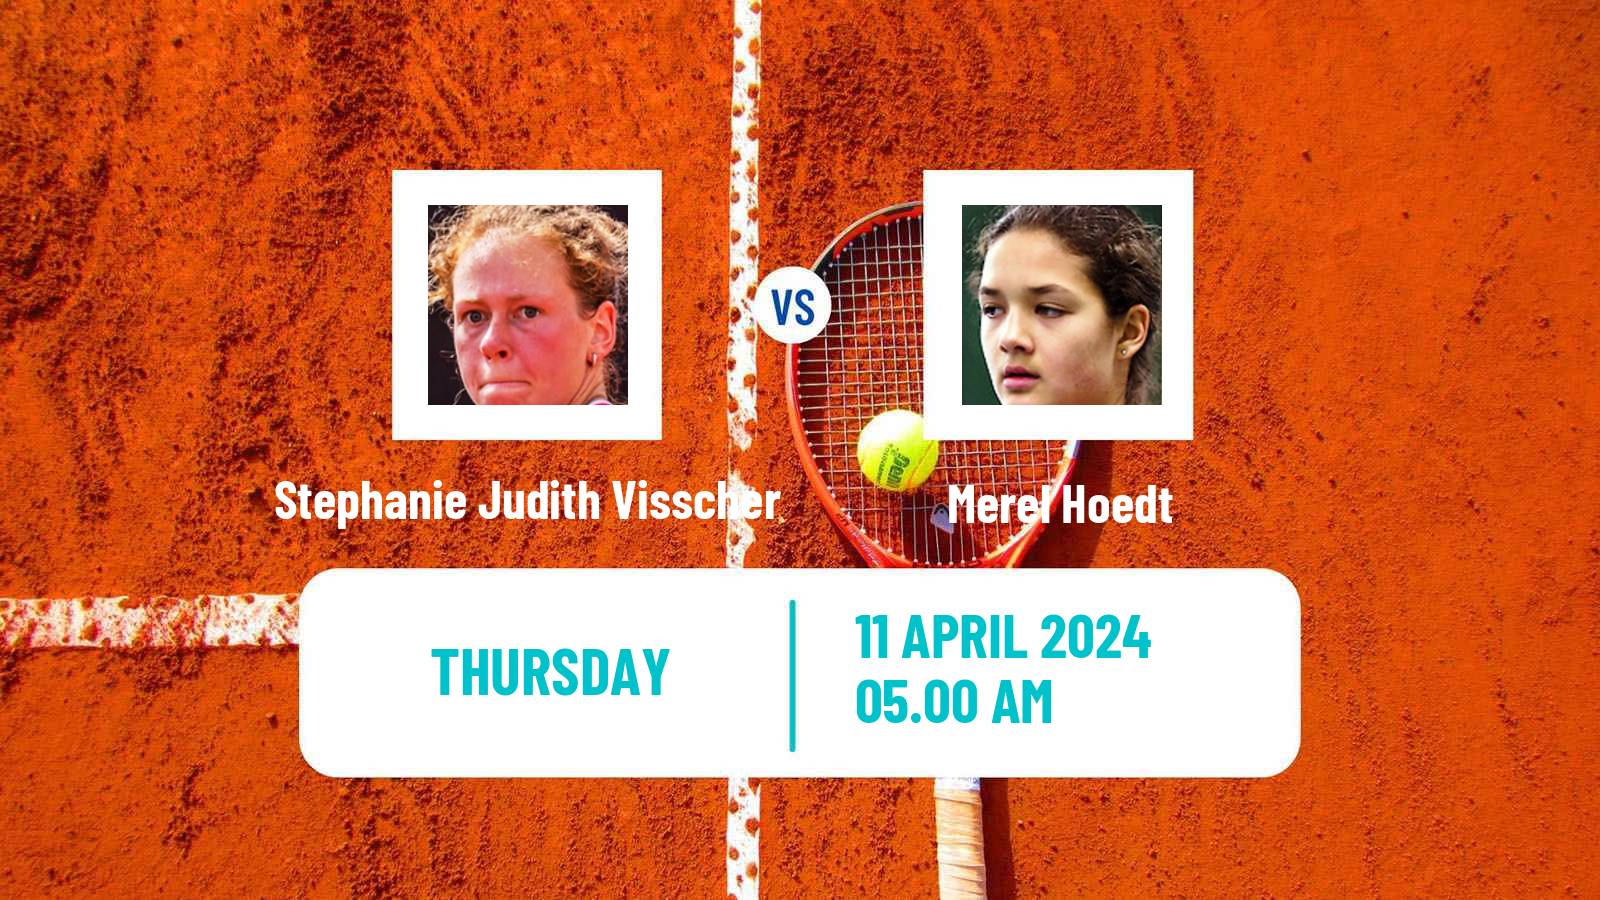 Tennis ITF W35 Bujumbura 2 Women Stephanie Judith Visscher - Merel Hoedt